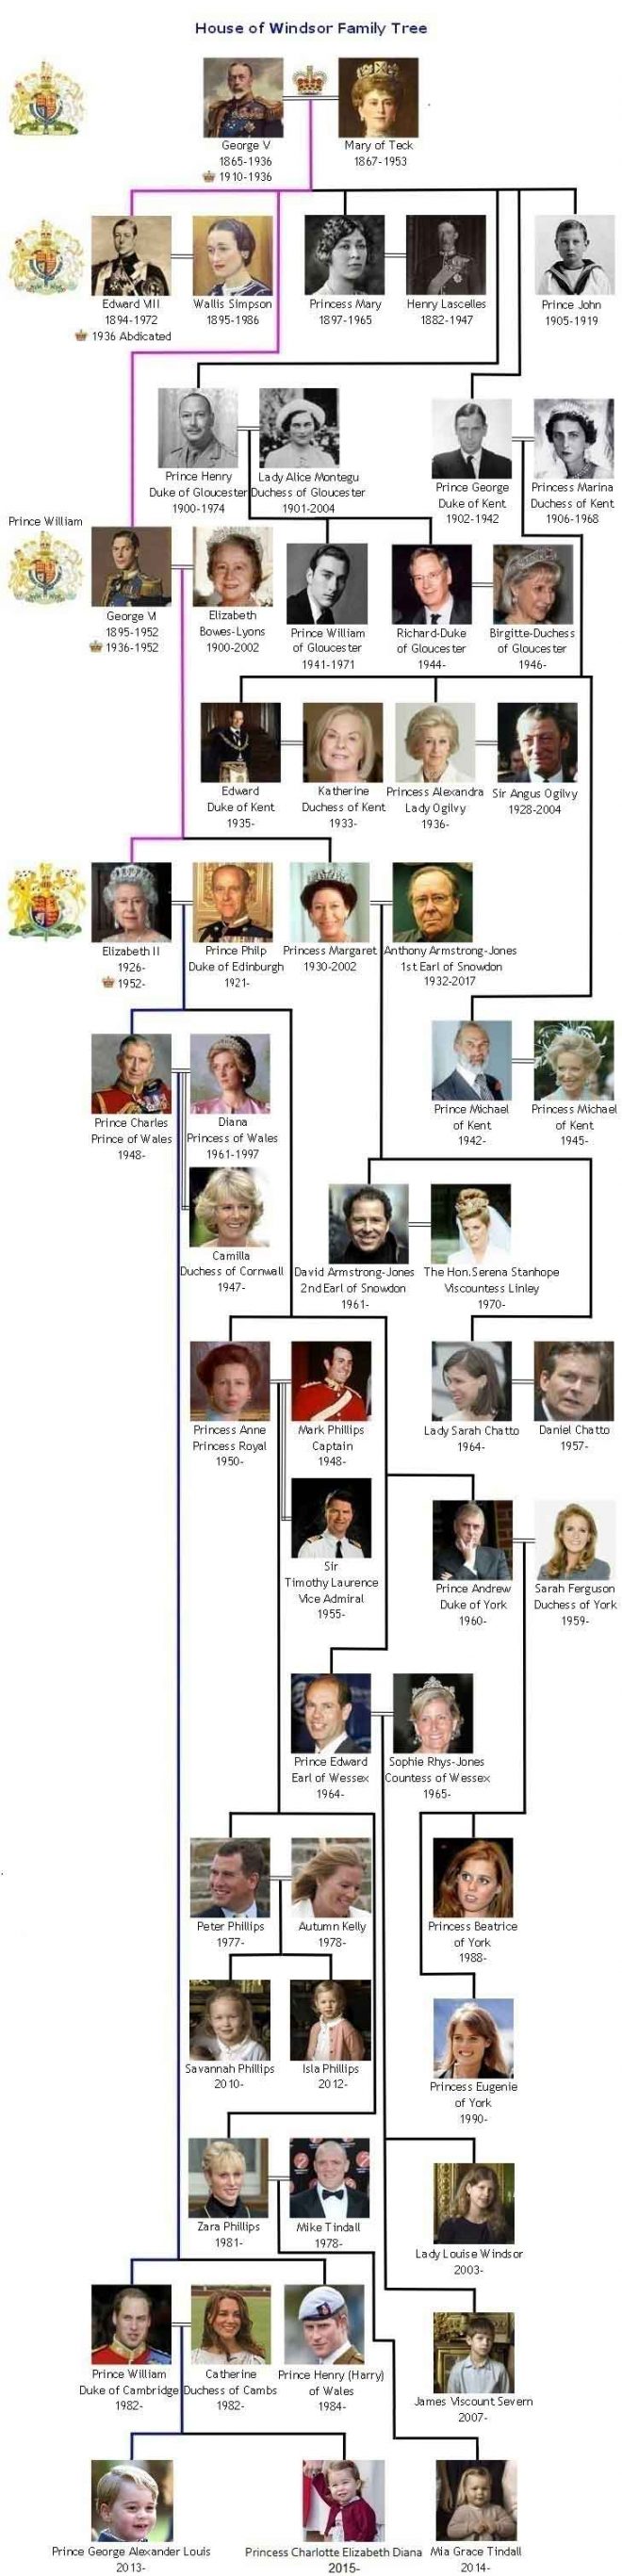 The Royal House of Windsor British Royal Family Tree